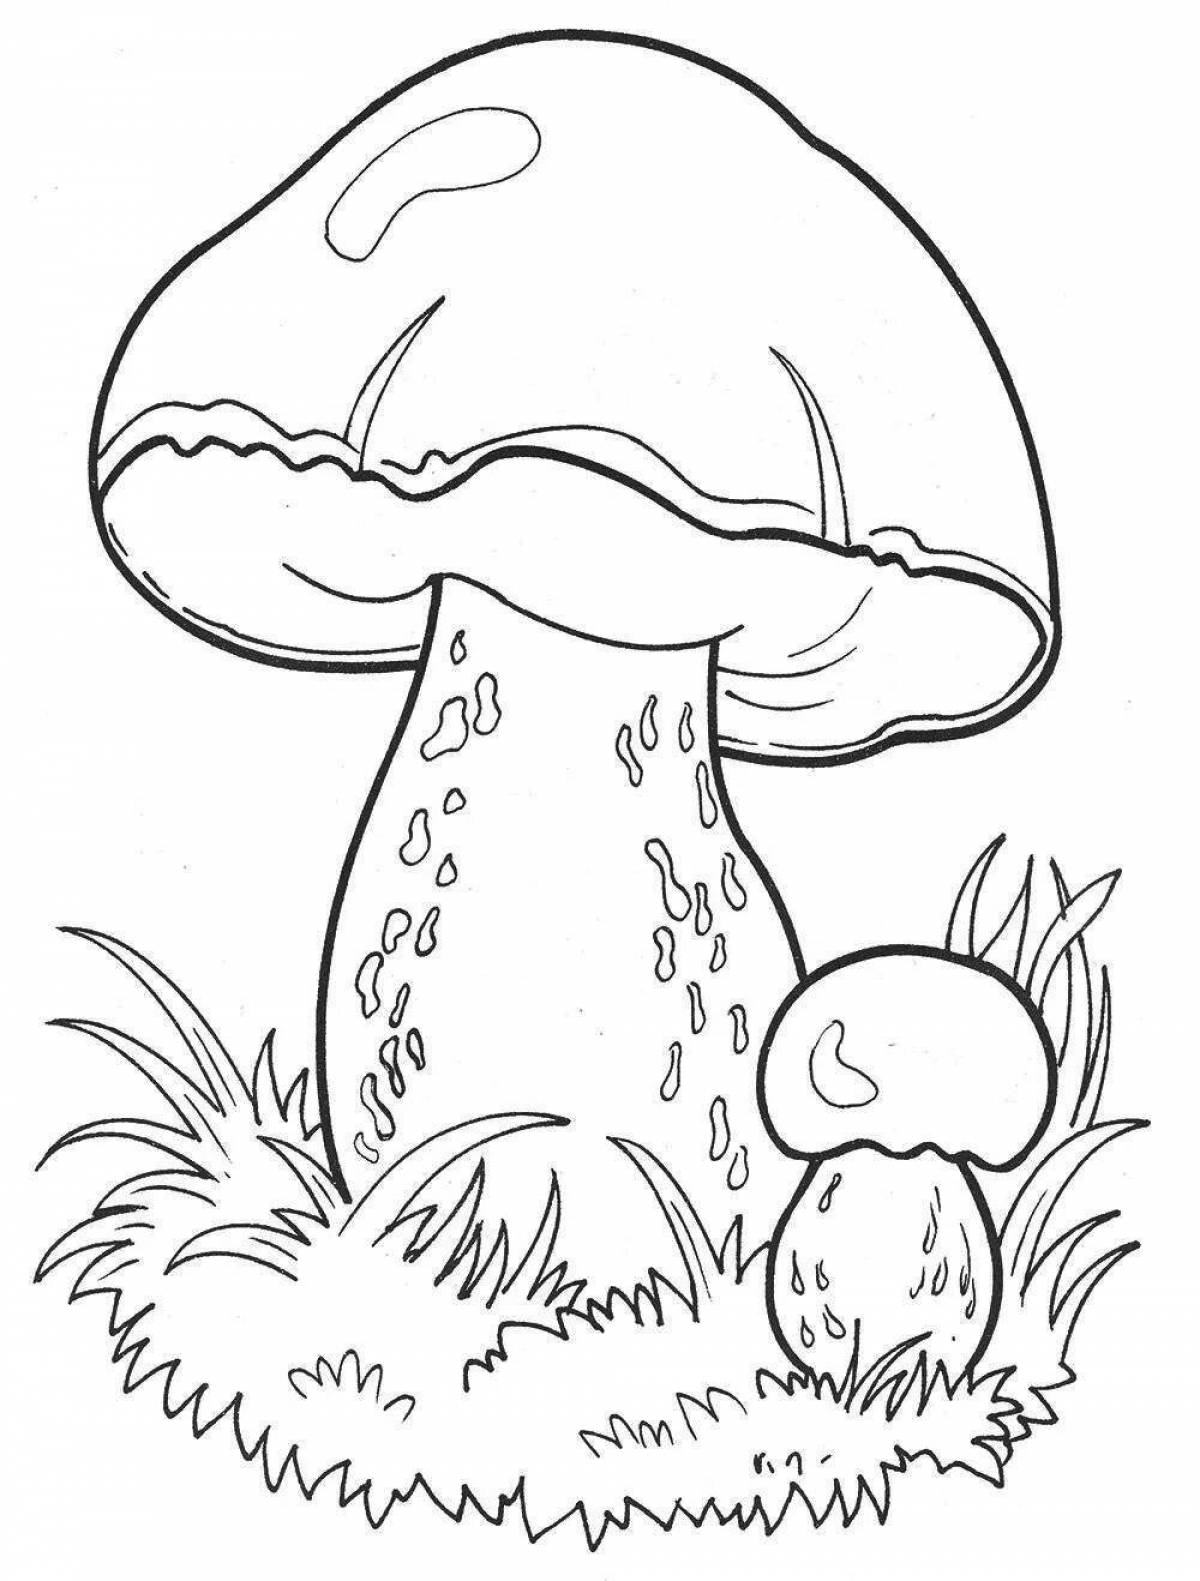 Satan mushroom coloring page